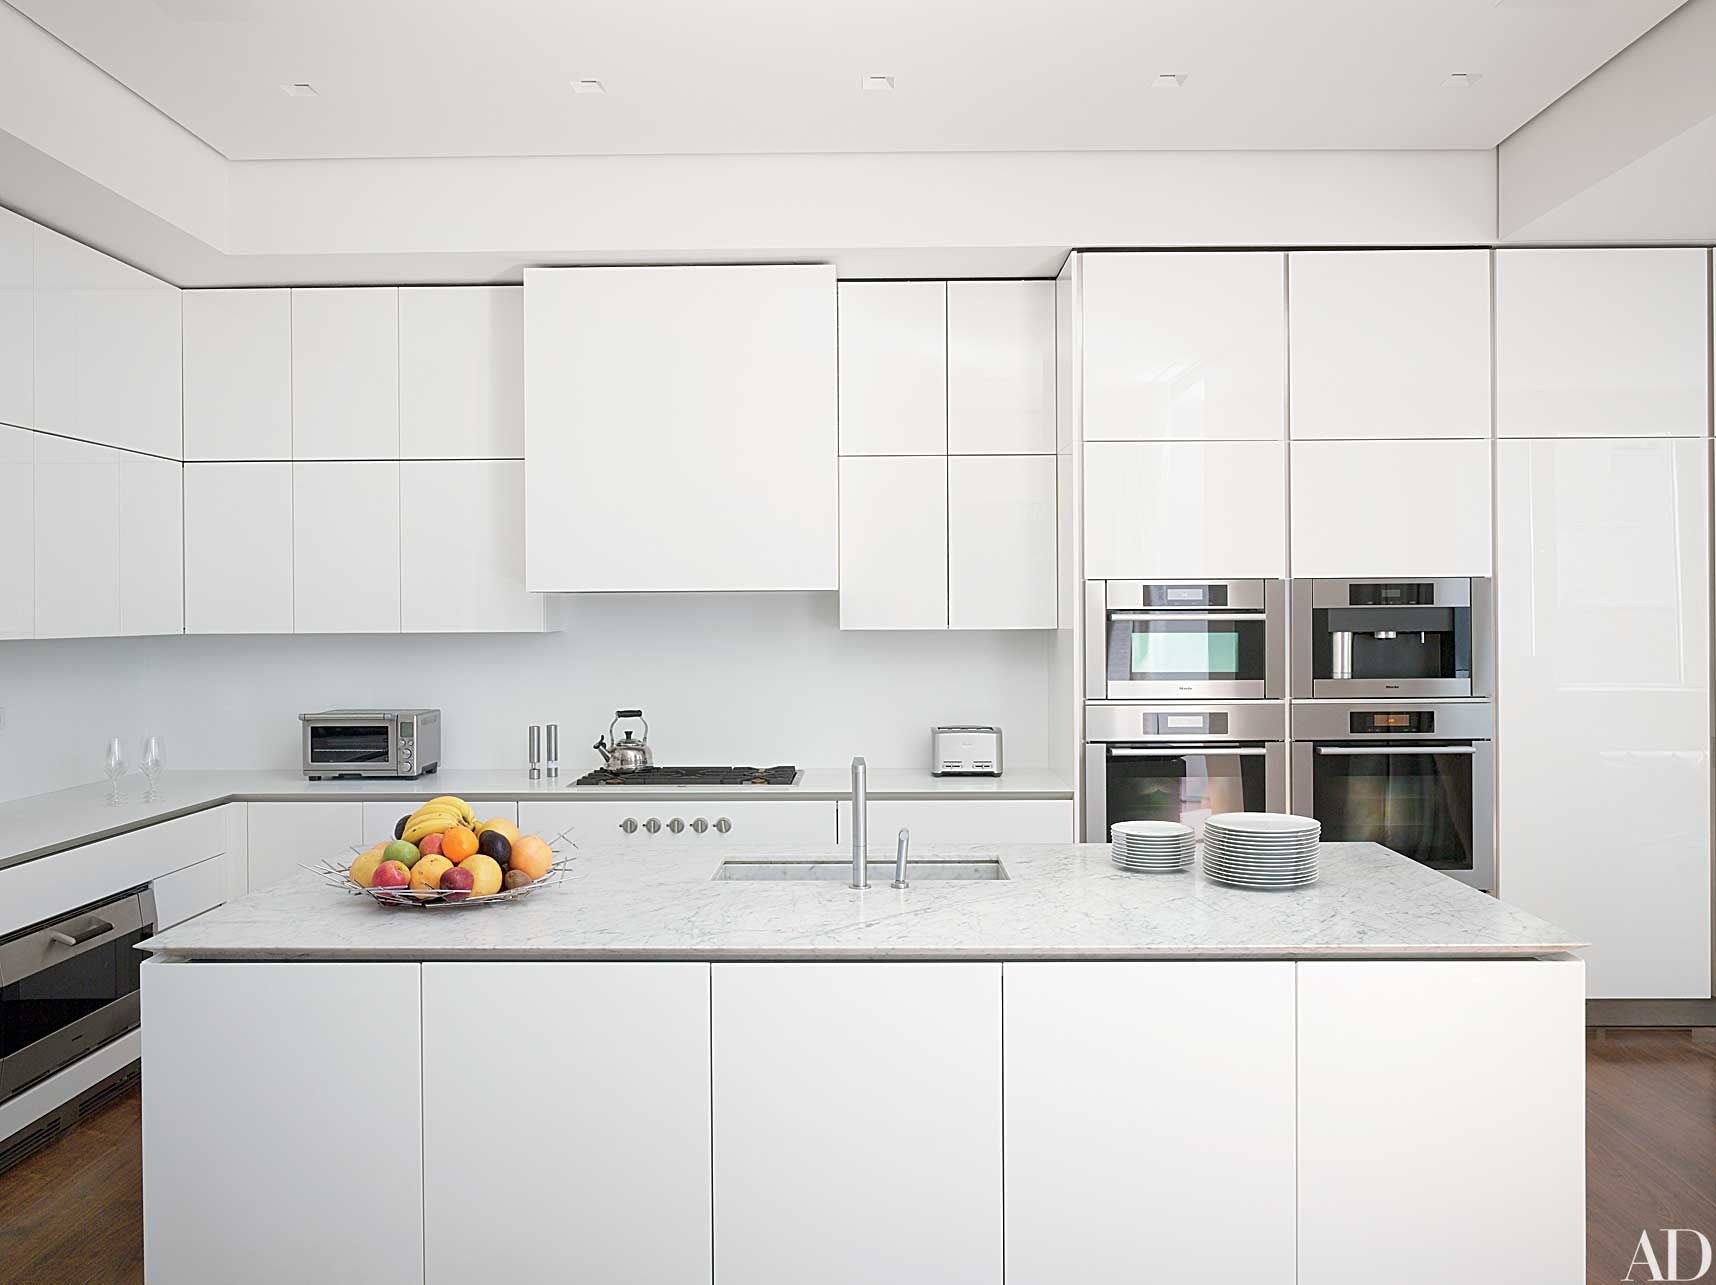 kitchen ideas with marble countertops 17 kitchens with classic marble countertops photos | architectural digest ZTEJHKW